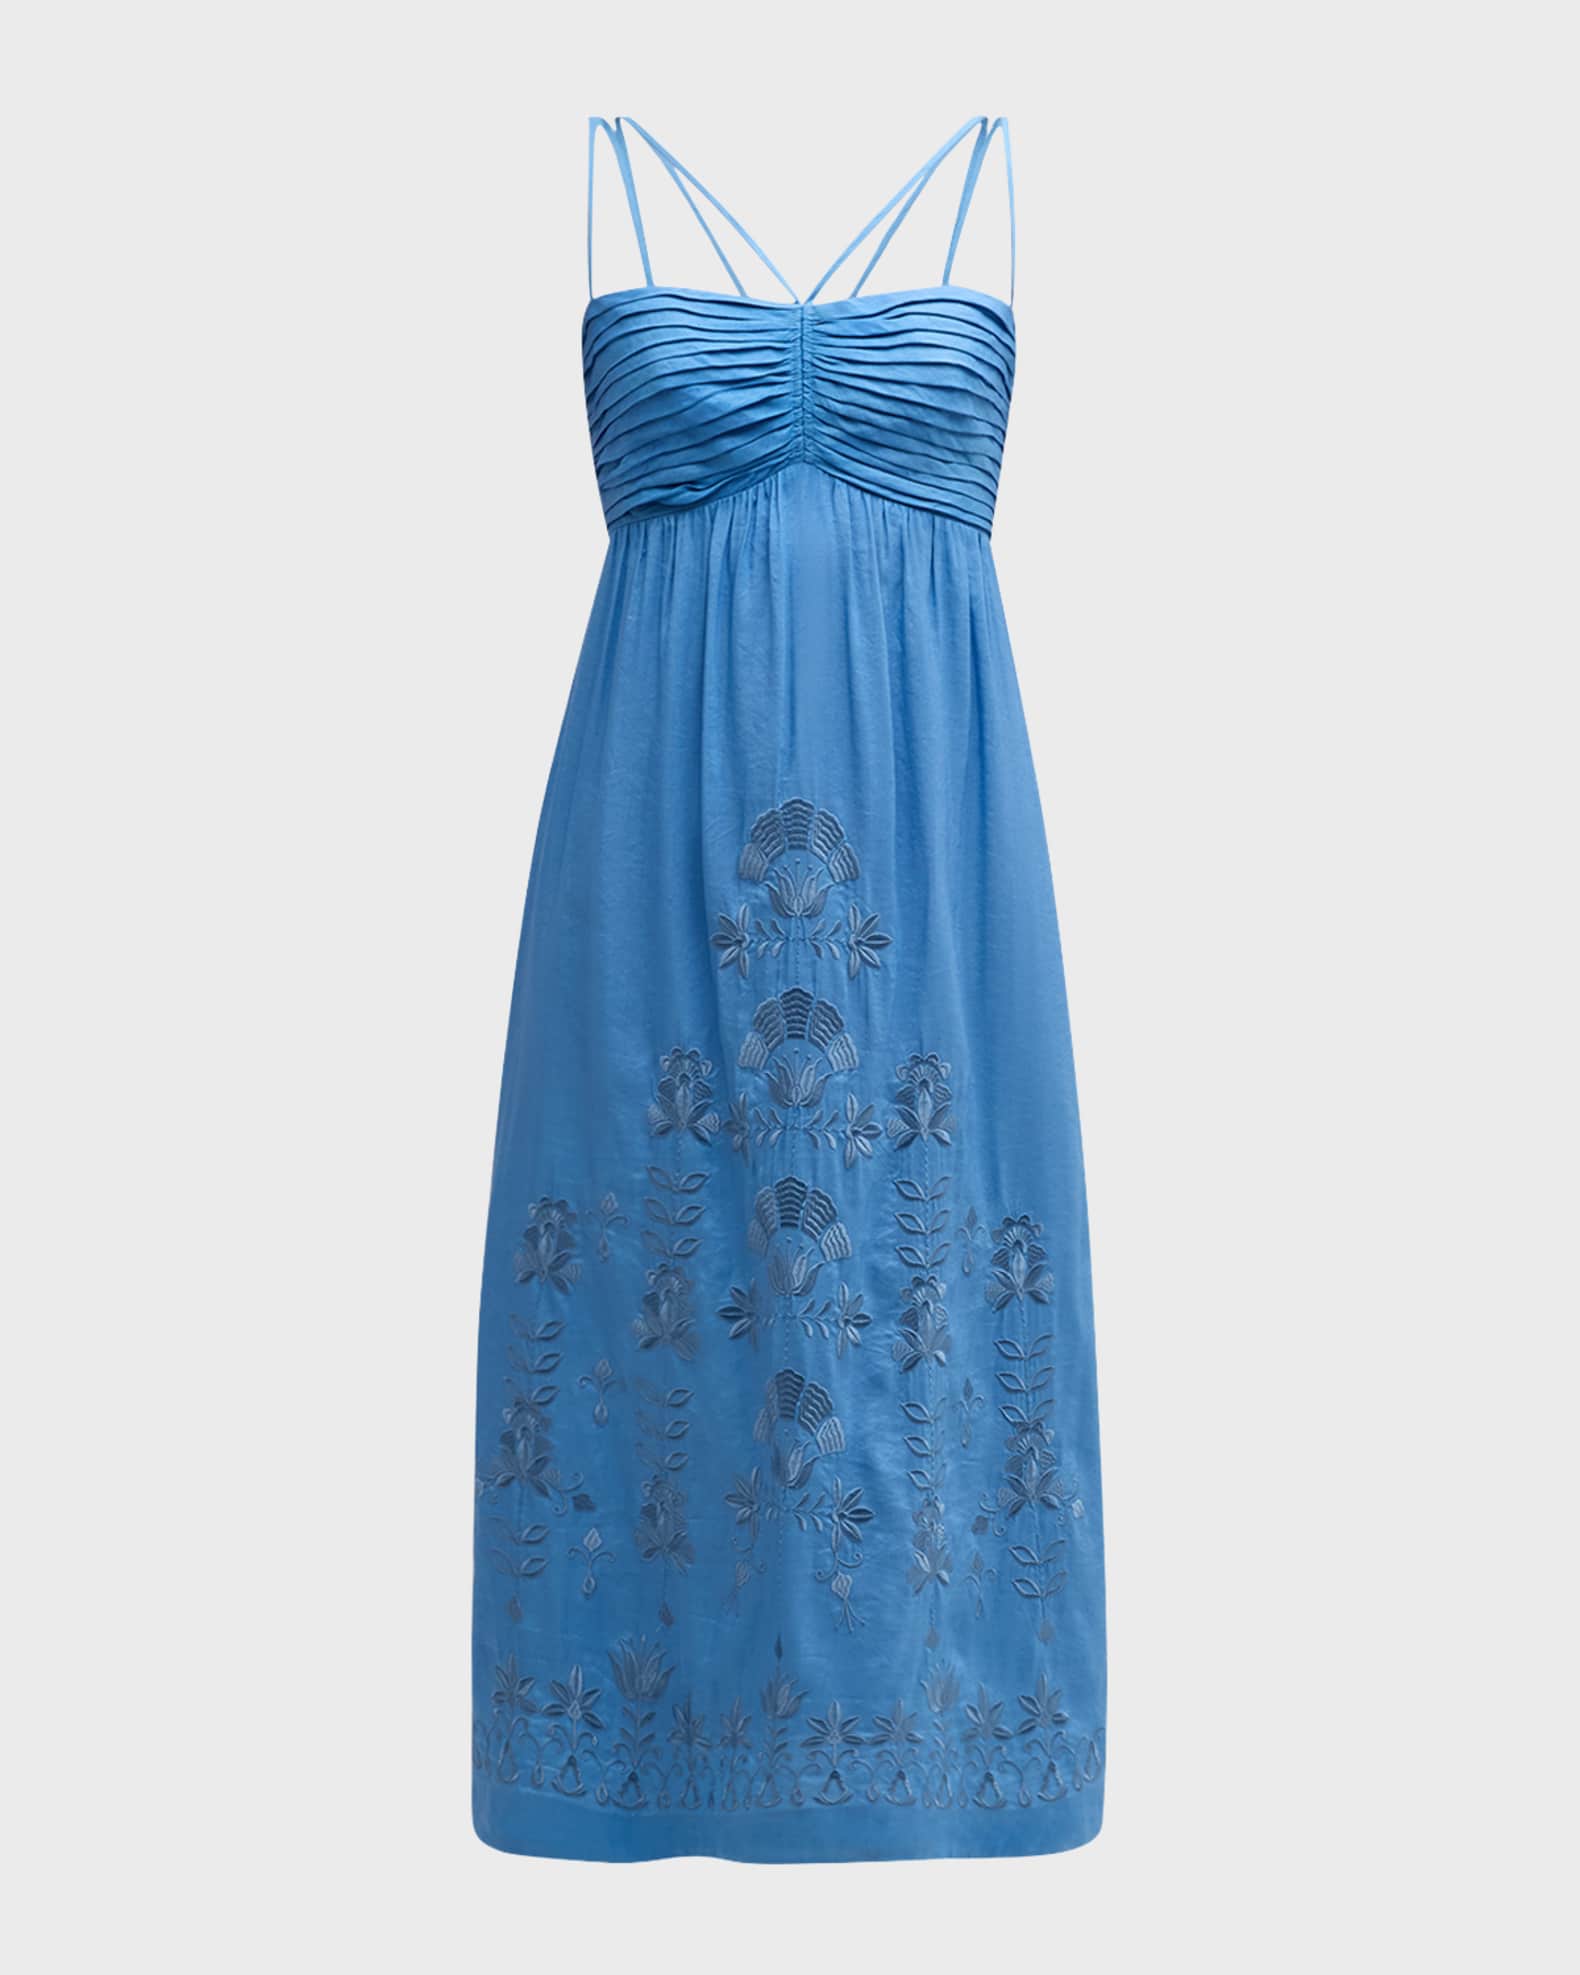 Kobi Halperin Ariella Pleated Floral-Embroidered Midi Dress | Neiman Marcus